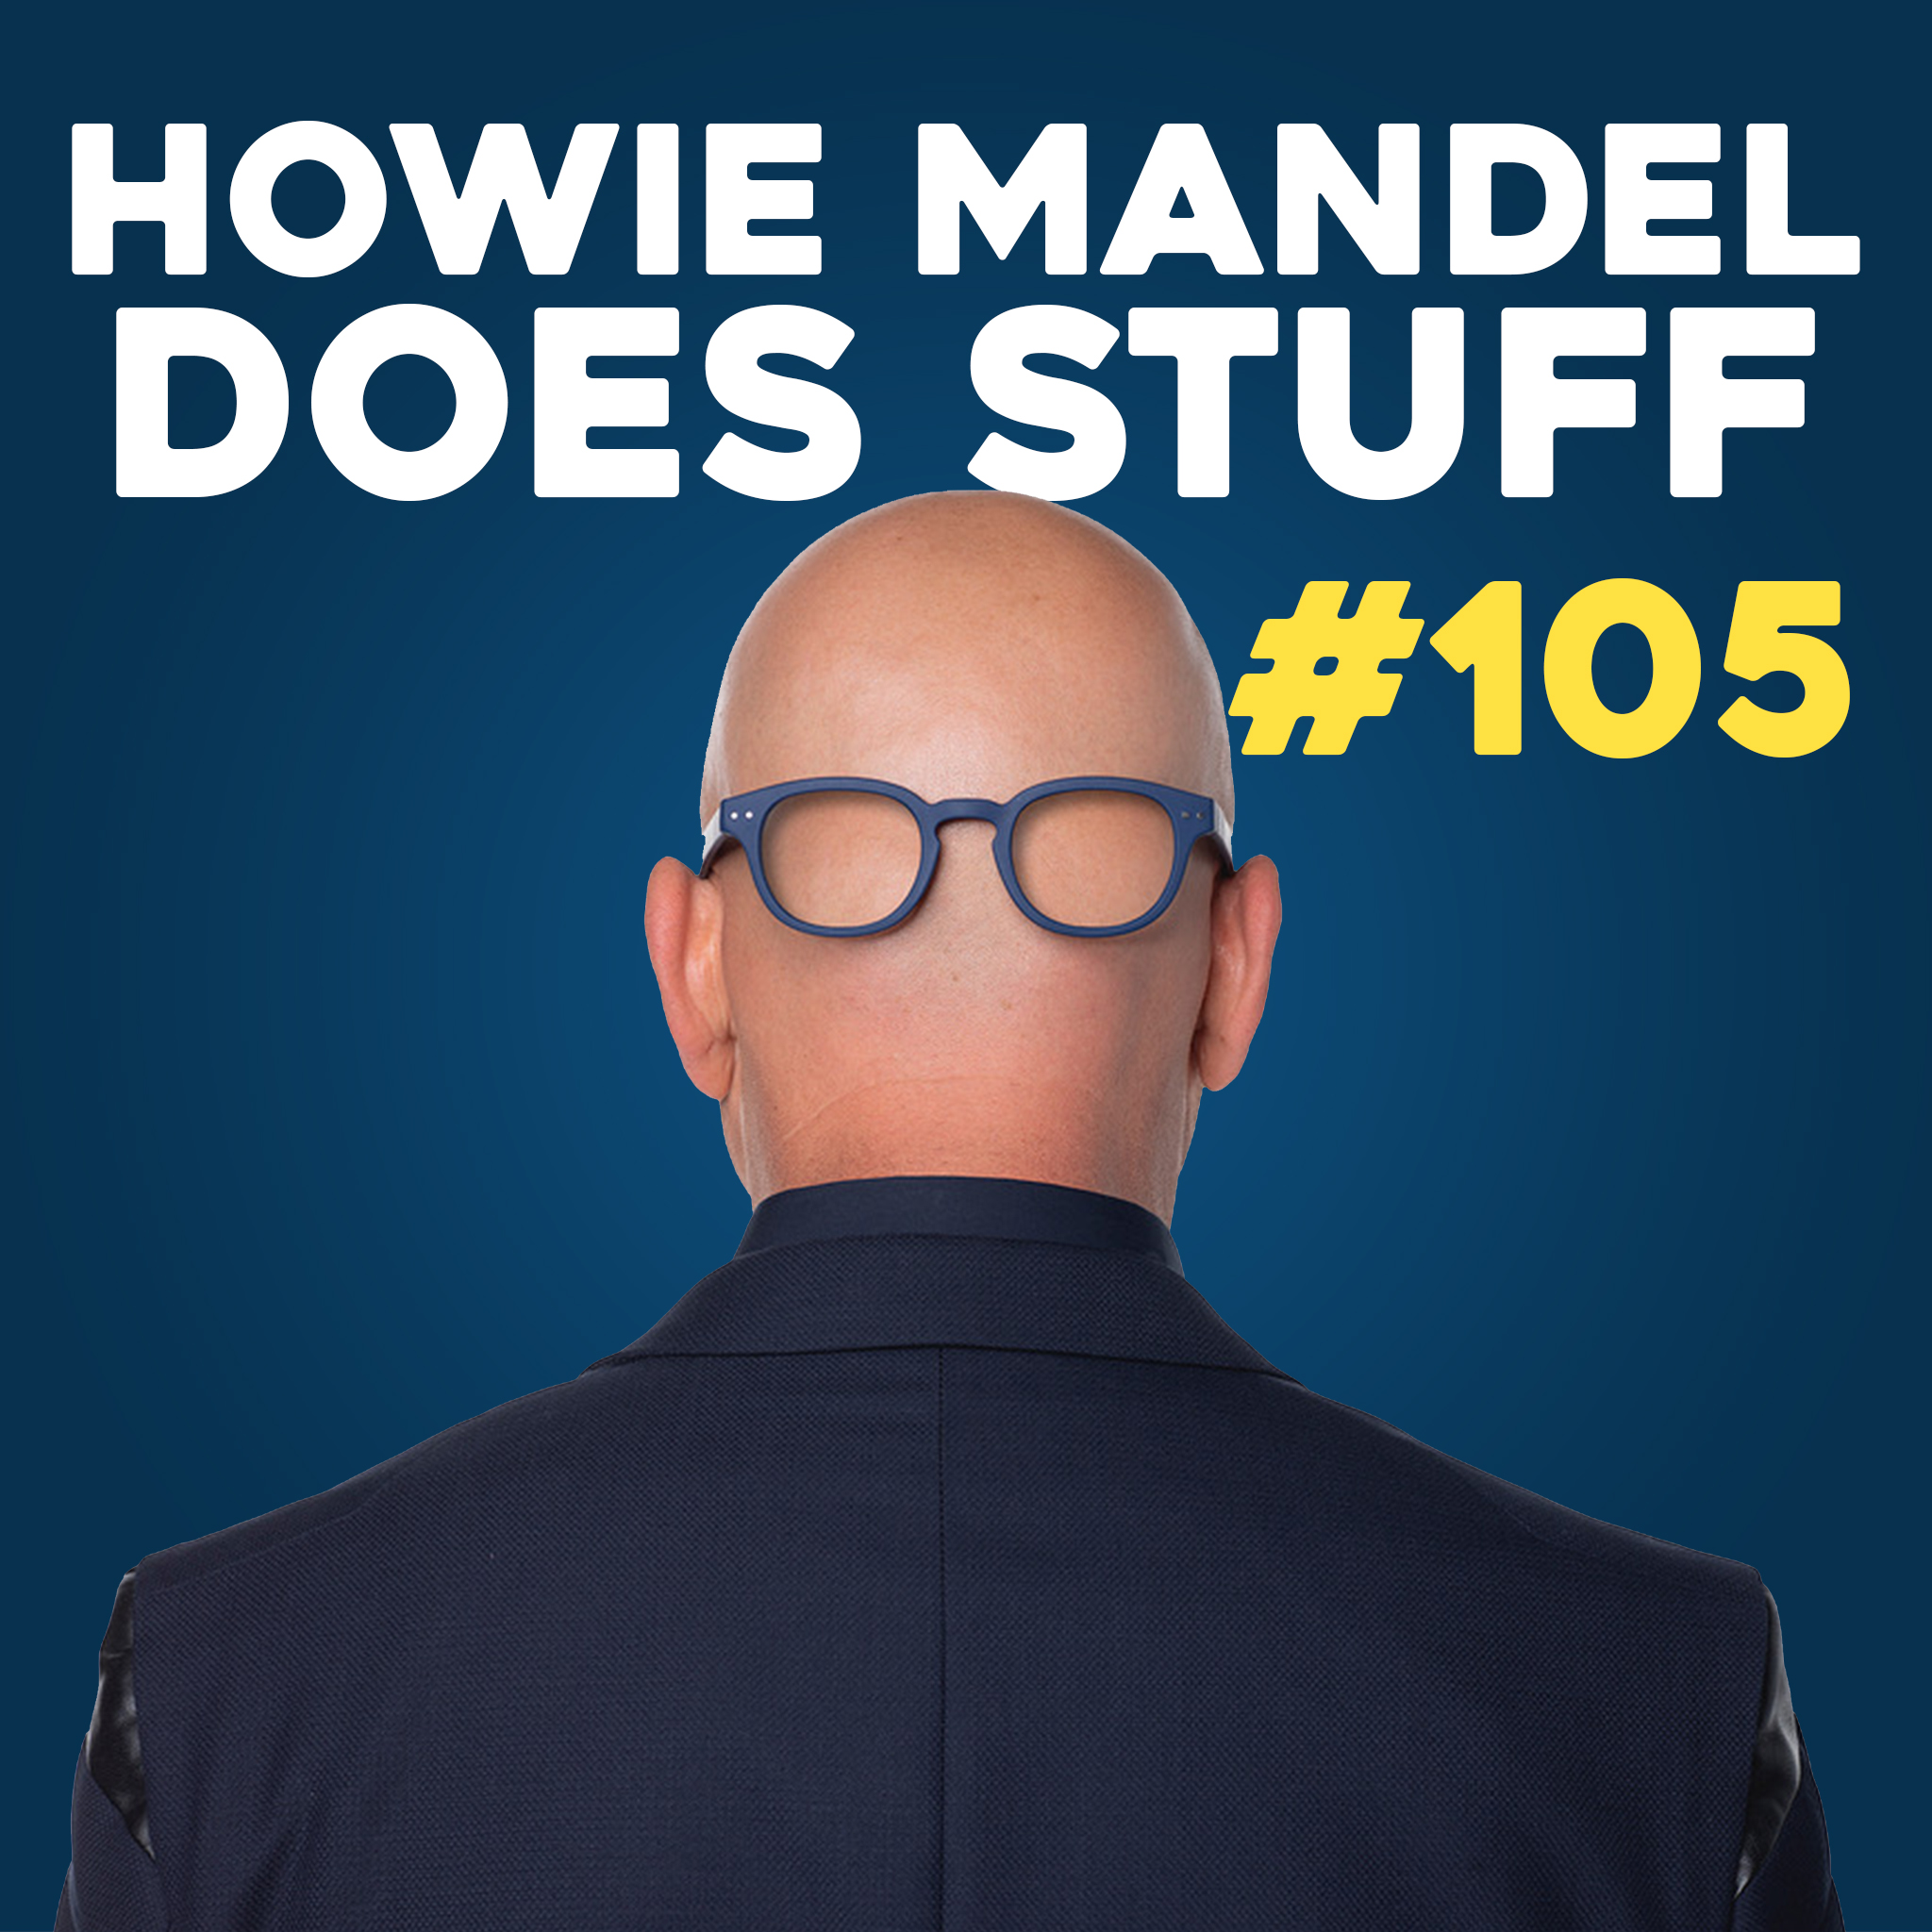 Howie Mandel Hologram Crashes Comedy Festival | Howie Mandel Does Stuff #105